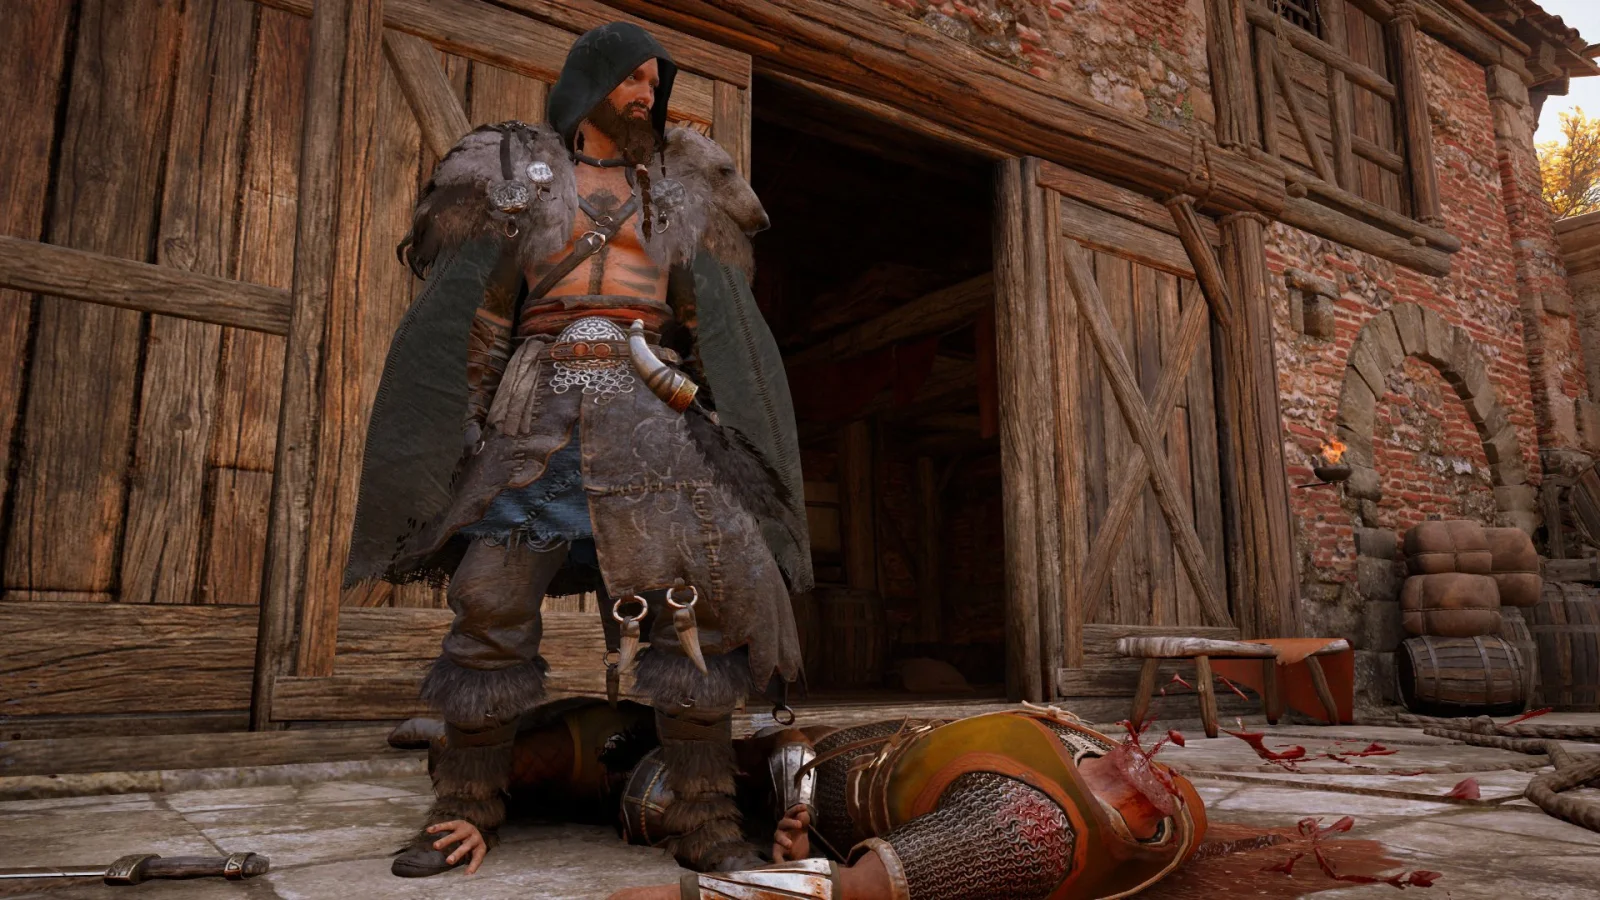 Need a head? - Assassin's Creed Valhalla